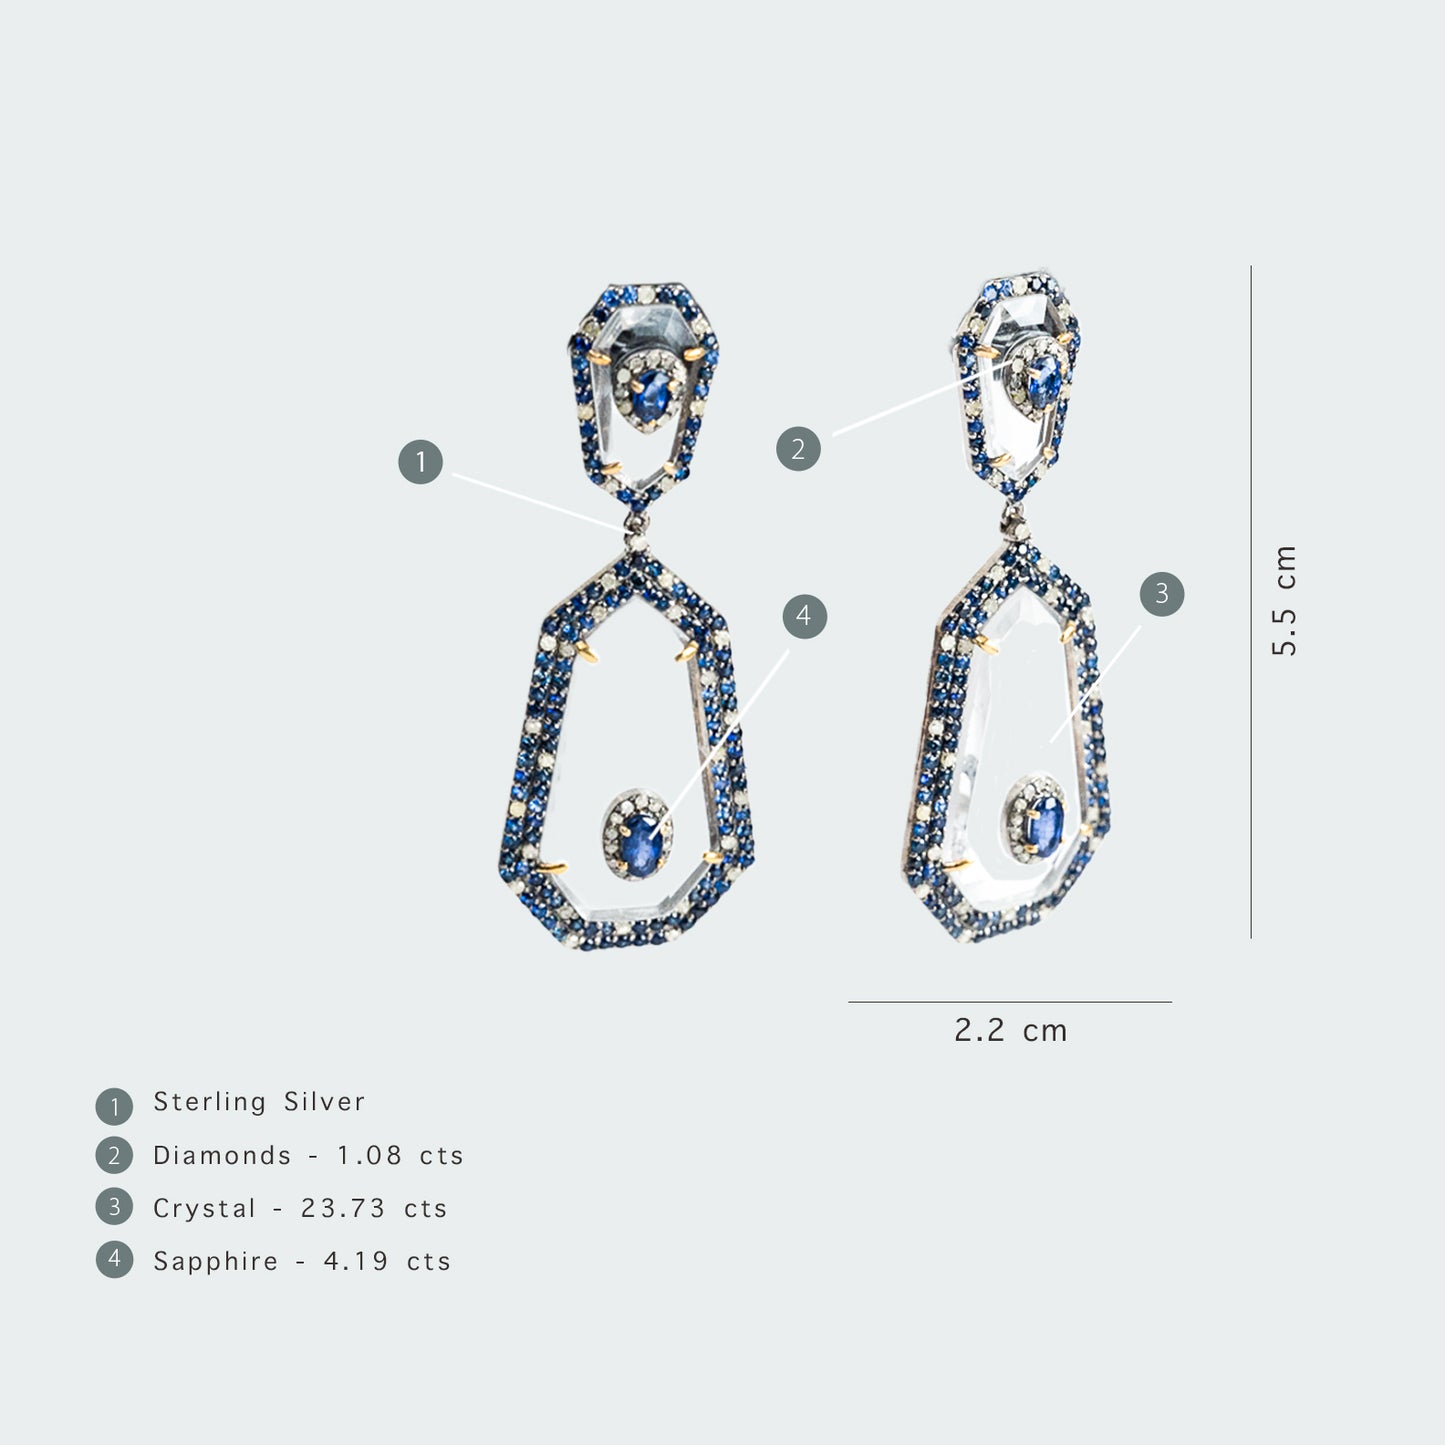 Estele Sapphire and Crystal Earrings